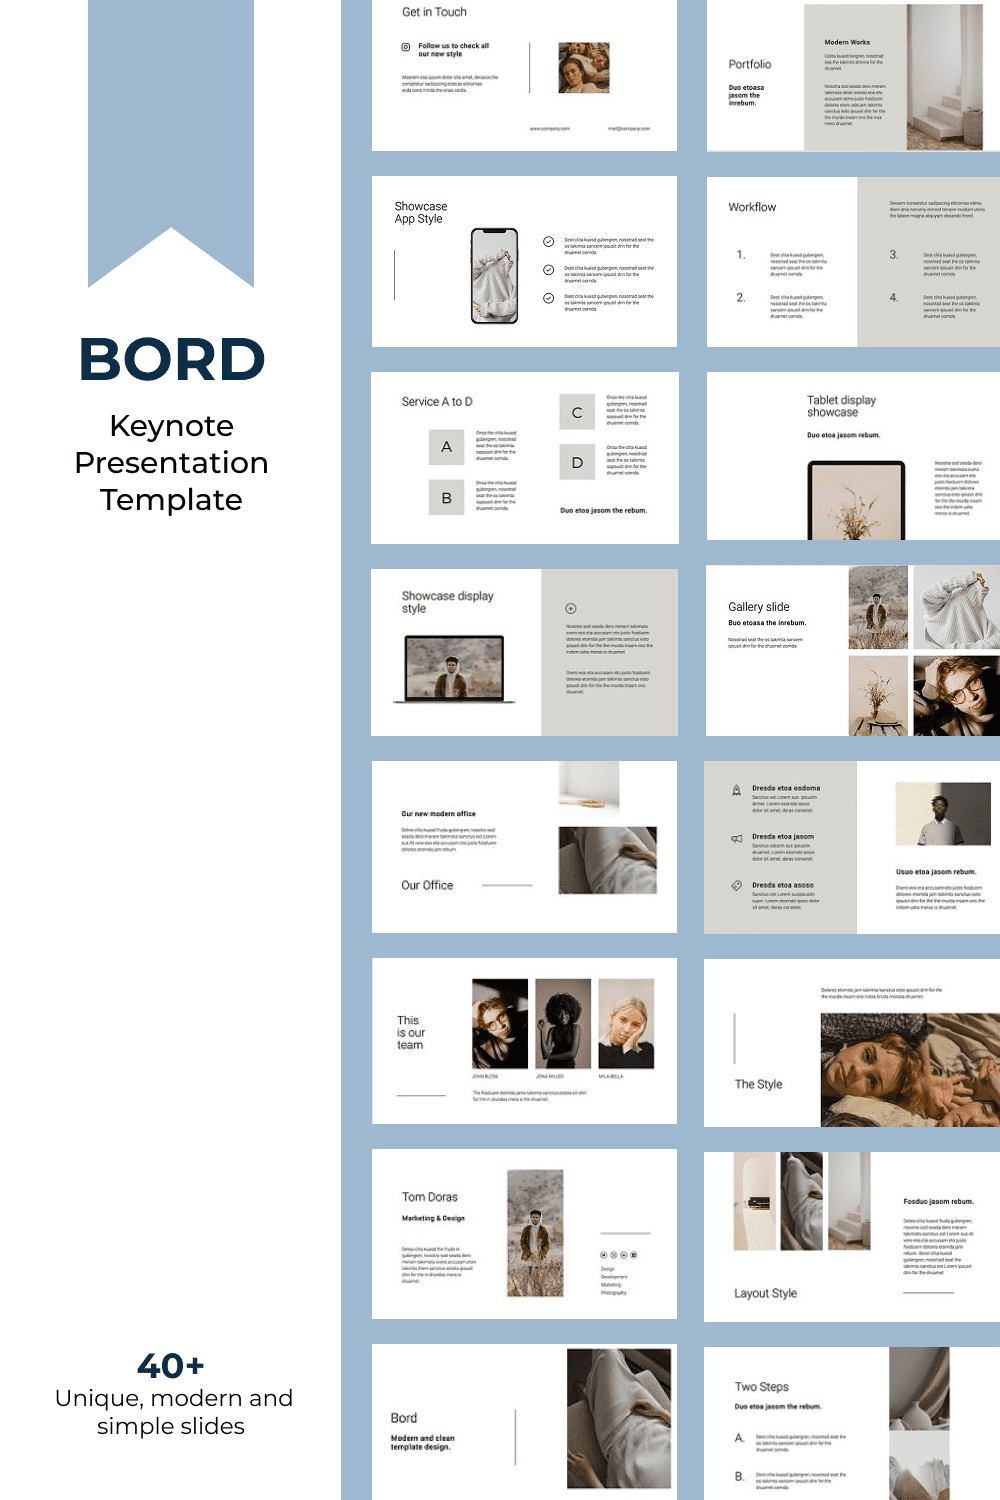 BORD - Neutral Keynote Template by MasterBundles Pinterest Collage Image.